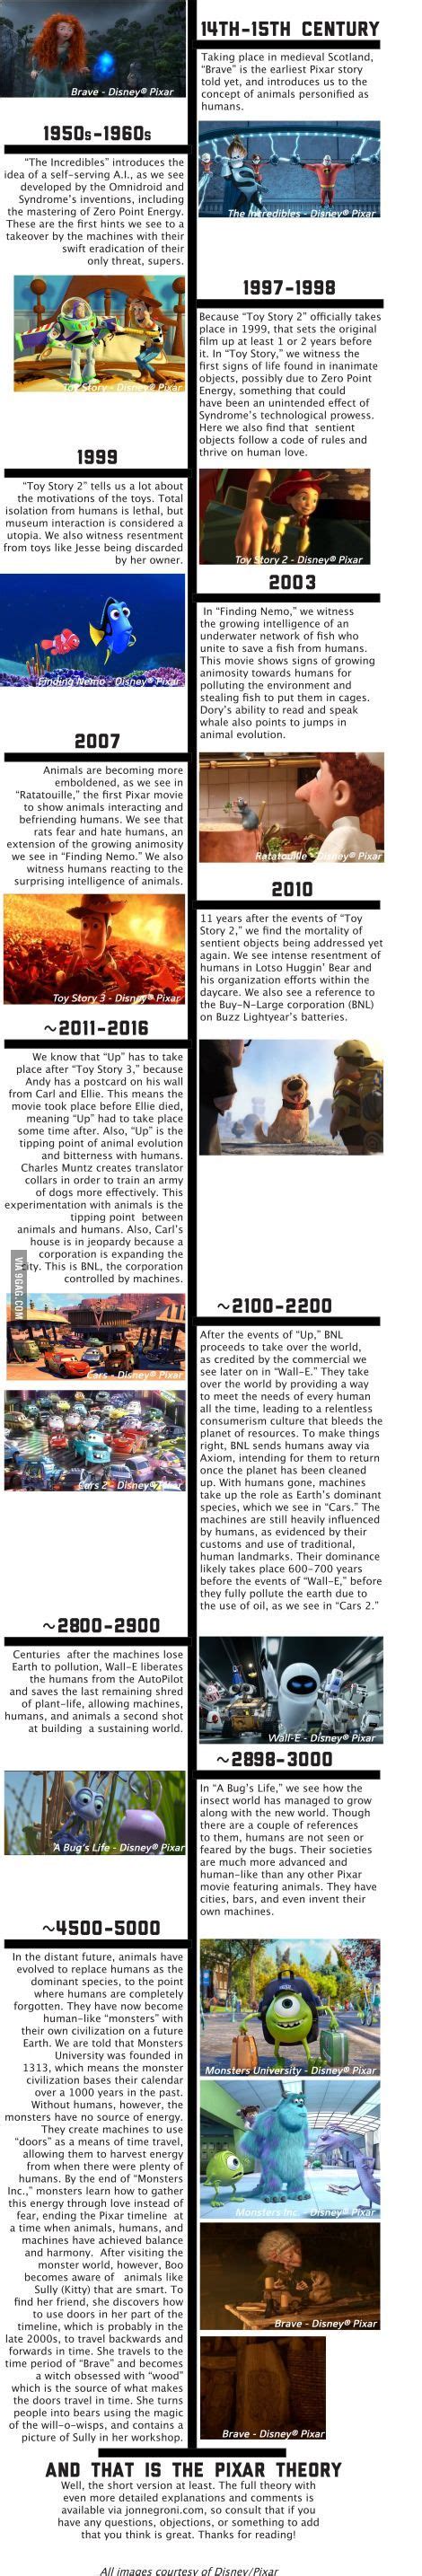 pixar theory by jon negroni books and movies i love pinterest